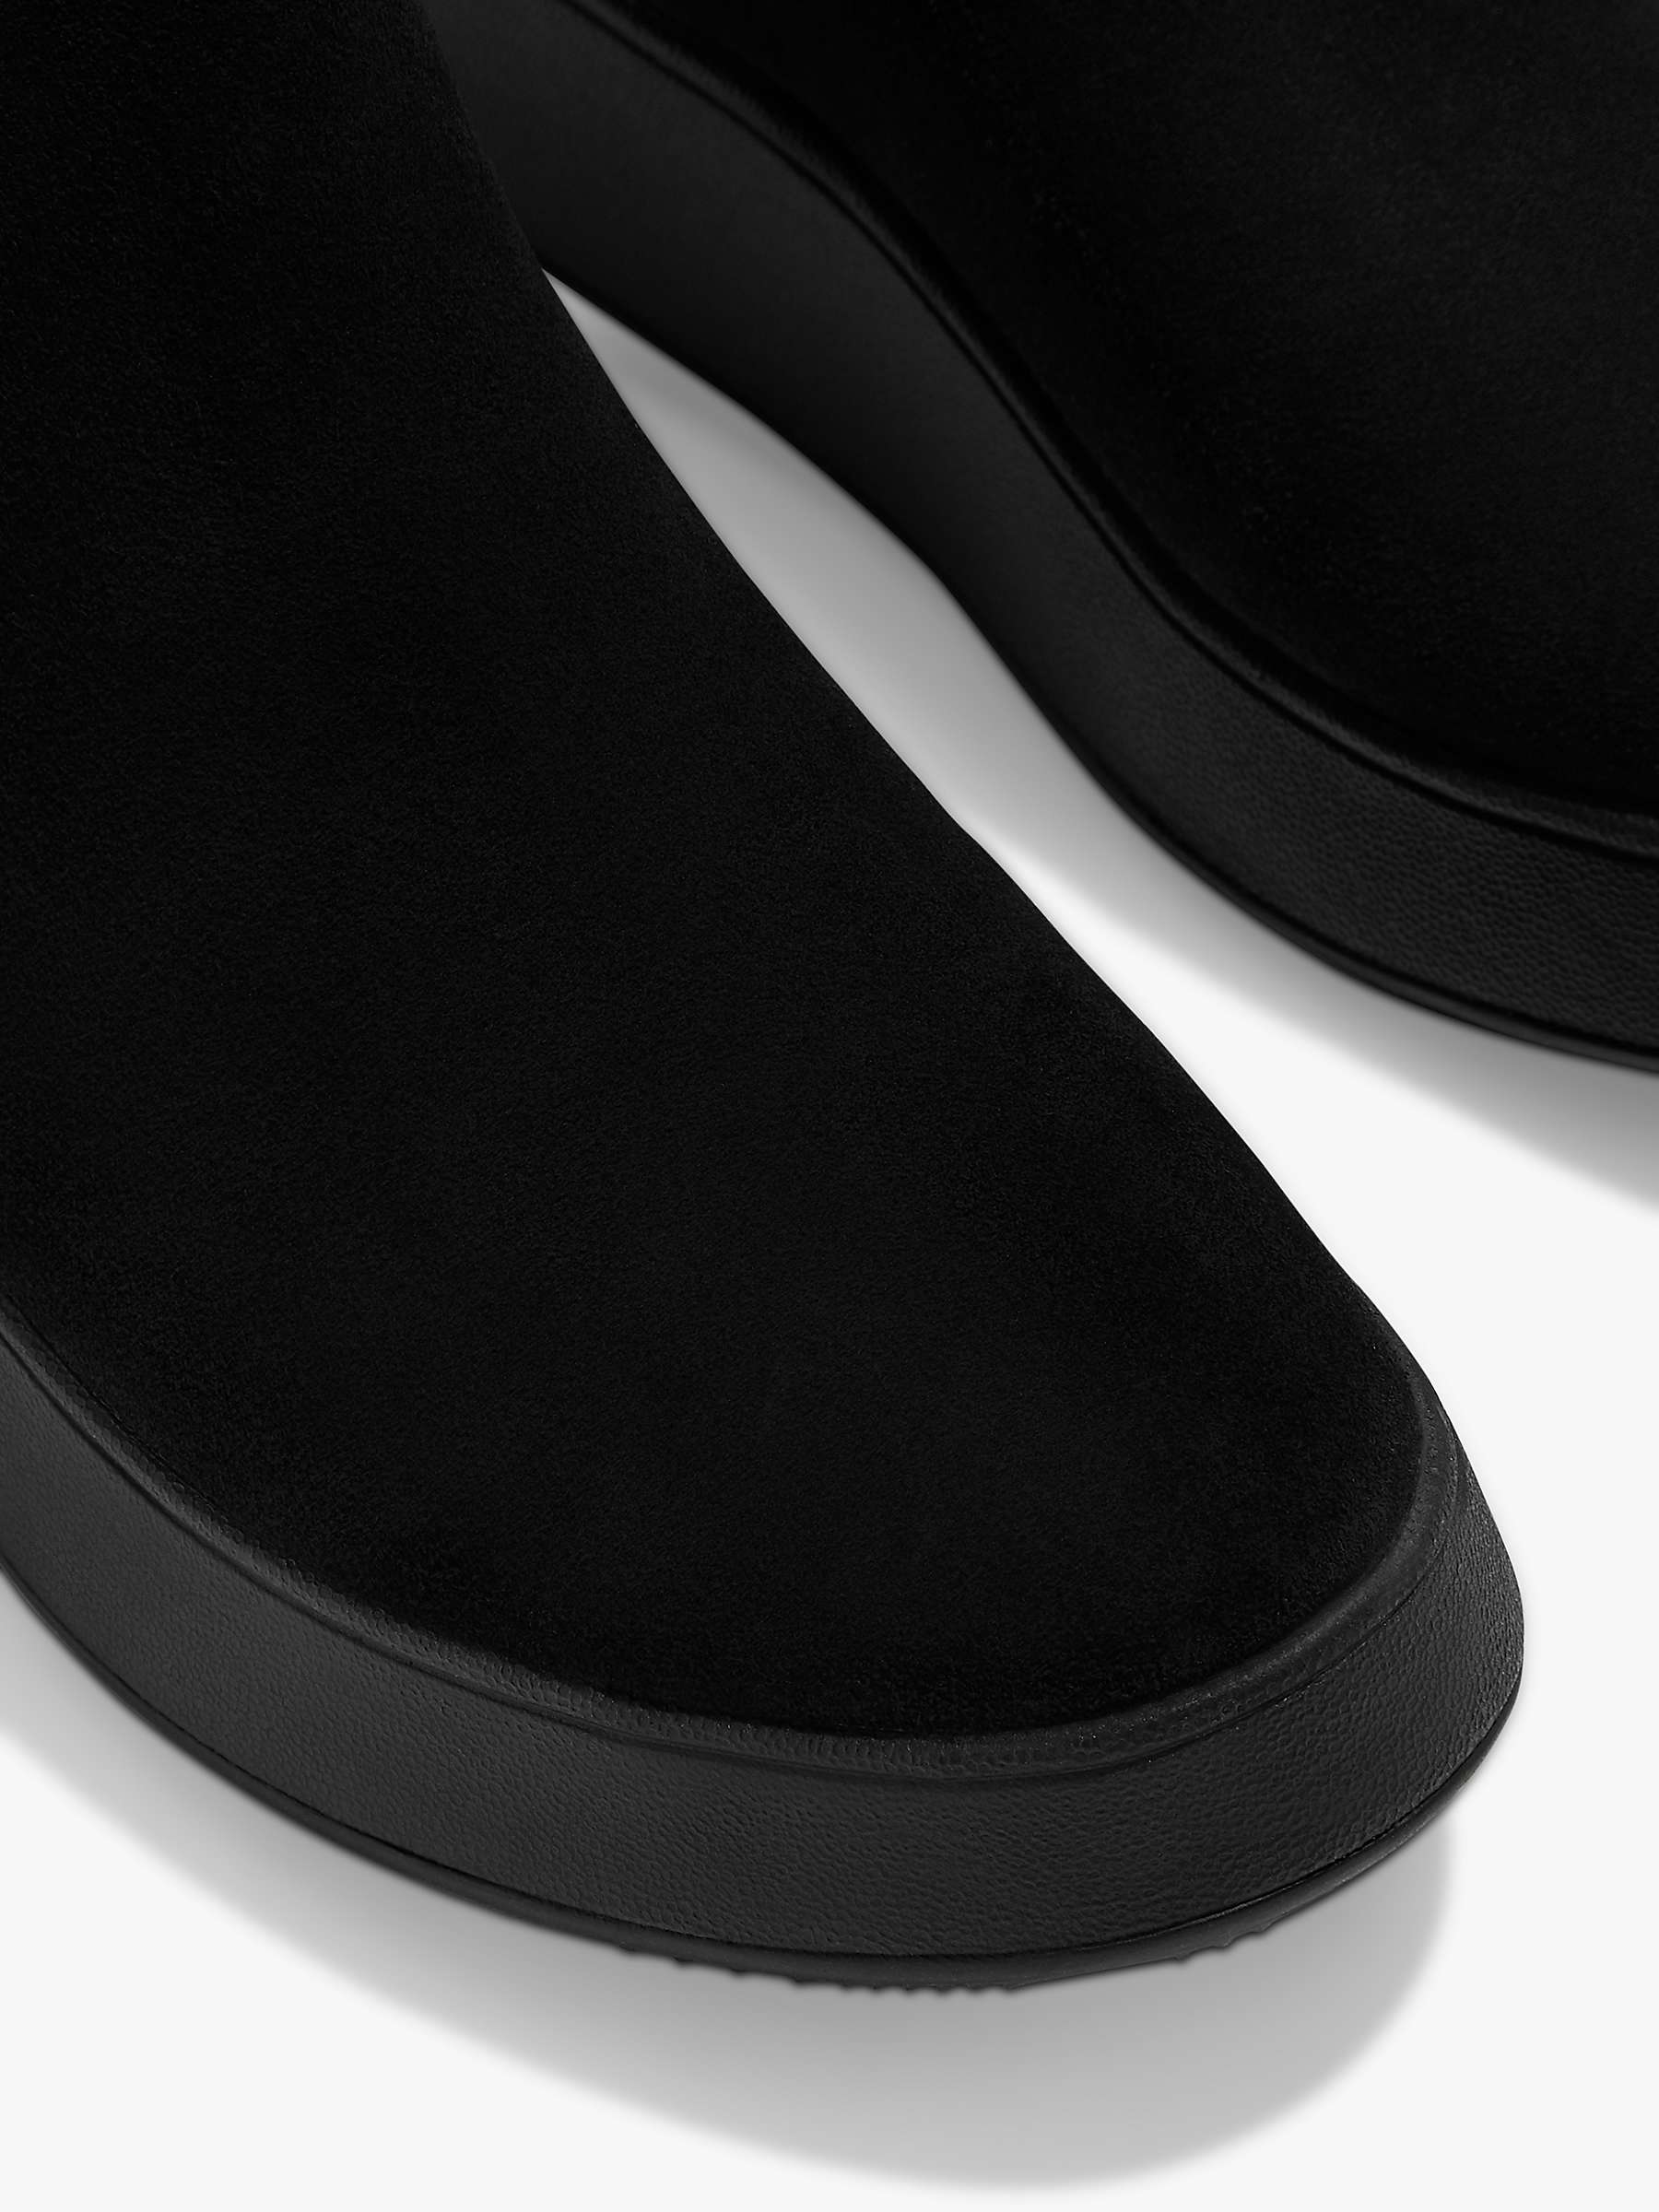 Buy FitFlop Suede Flatform Chelsea Boots Online at johnlewis.com